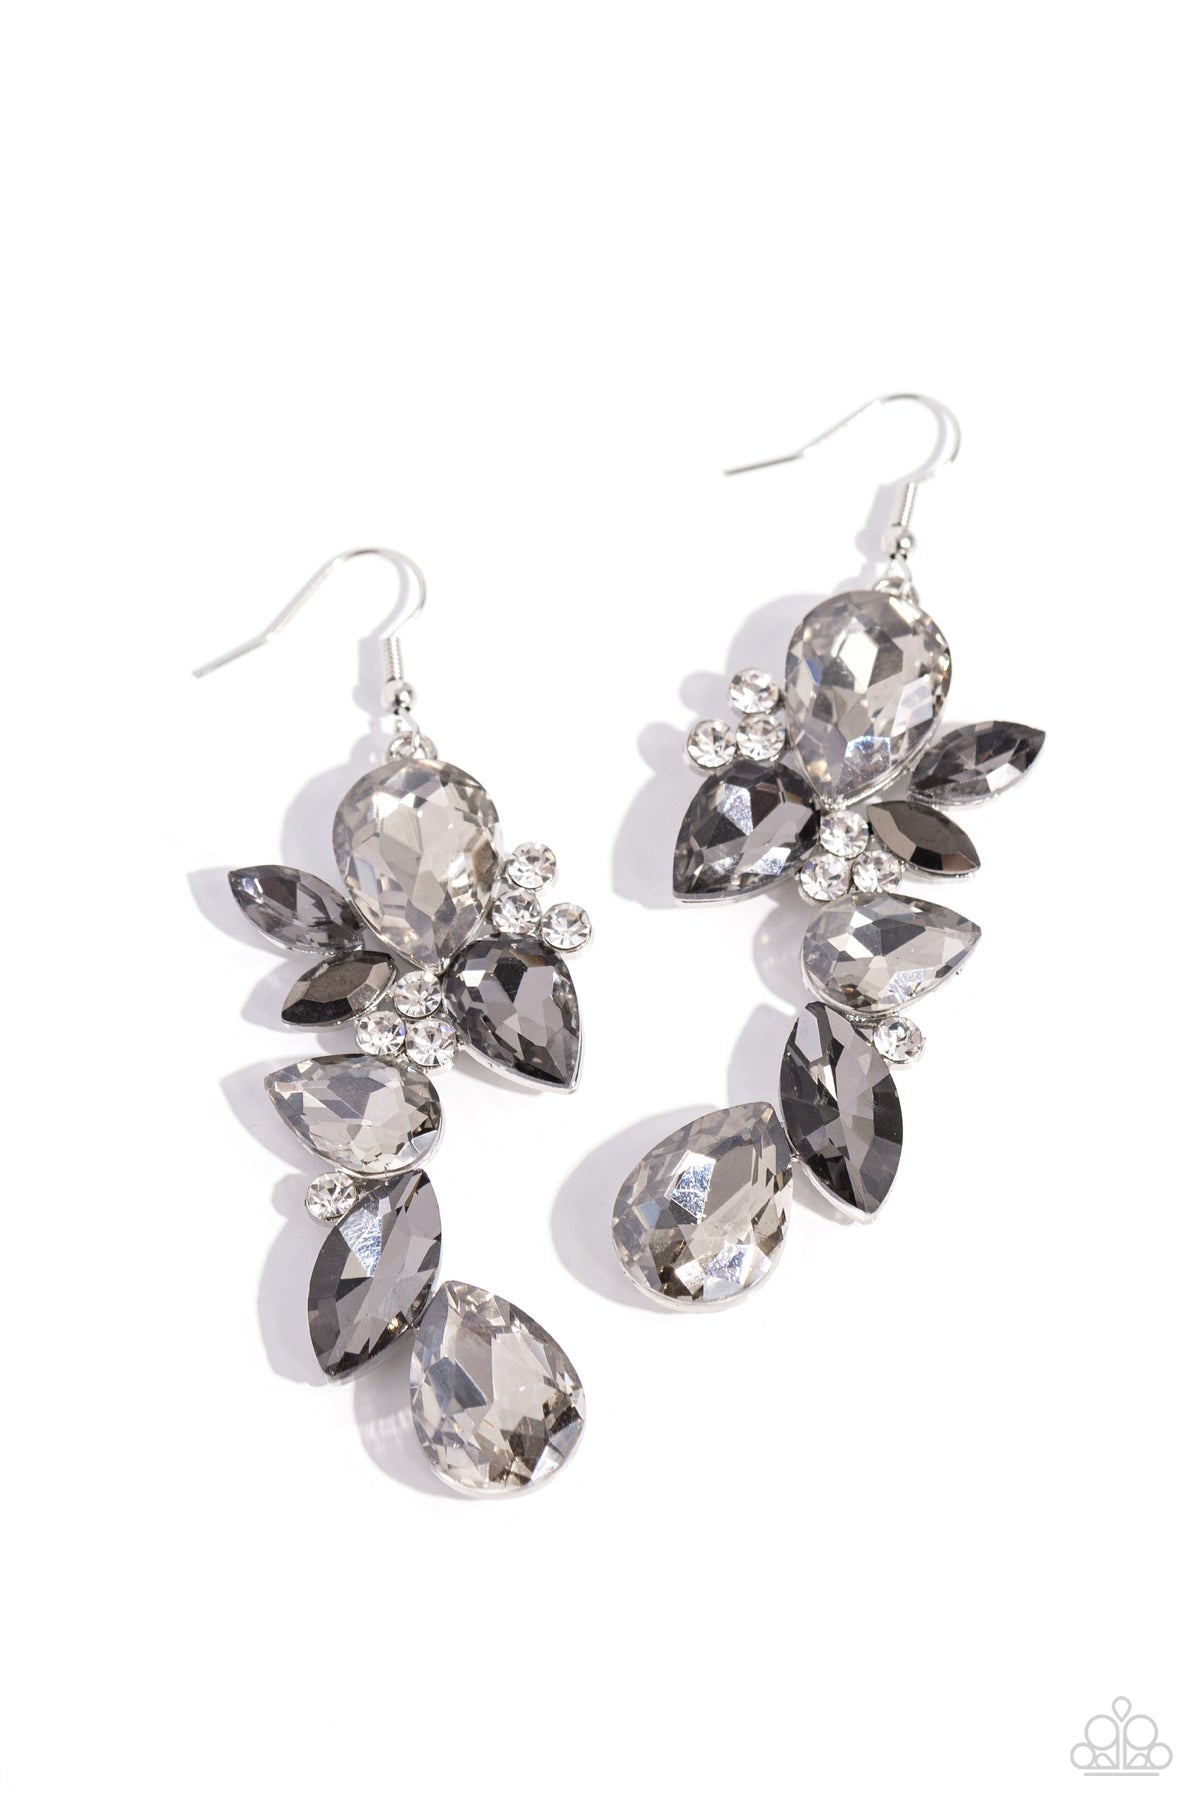 Fancy Flaunter Silver Rhinestone Earrings - Paparazzi Accessories- lightbox - CarasShop.com - $5 Jewelry by Cara Jewels